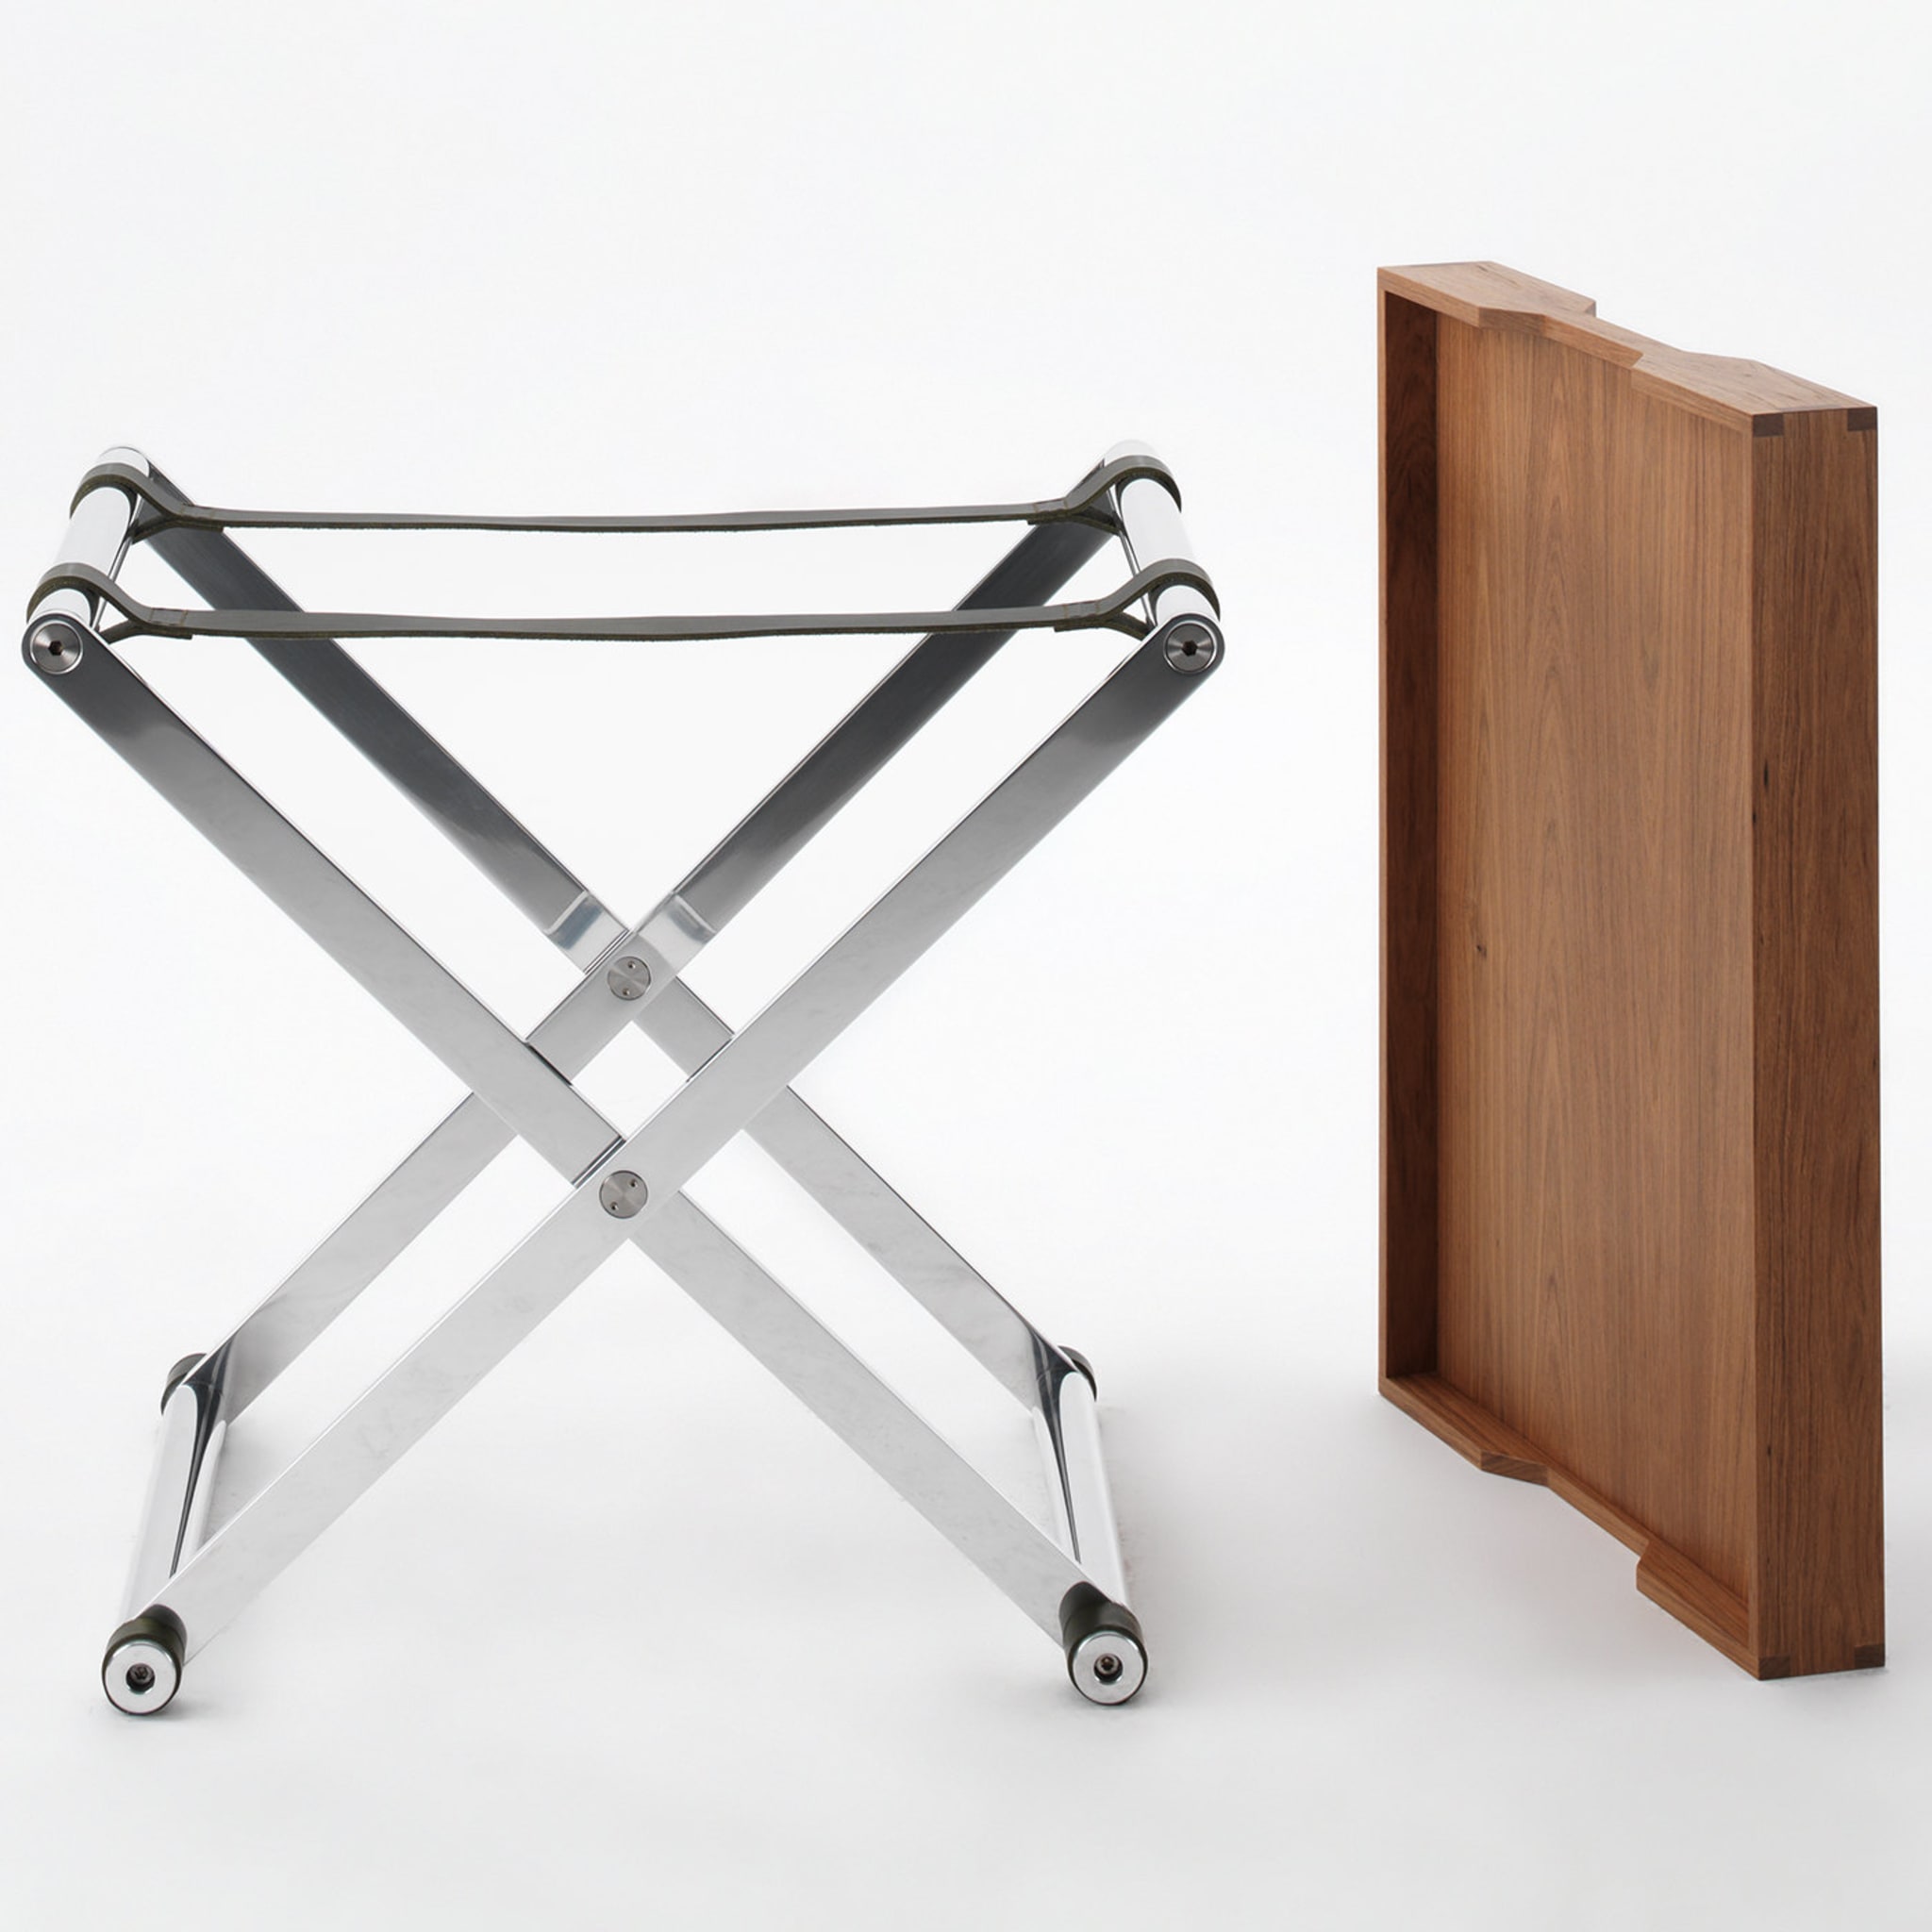 Andrea Foldable Table by Enrico Tonucci - Alternative view 2